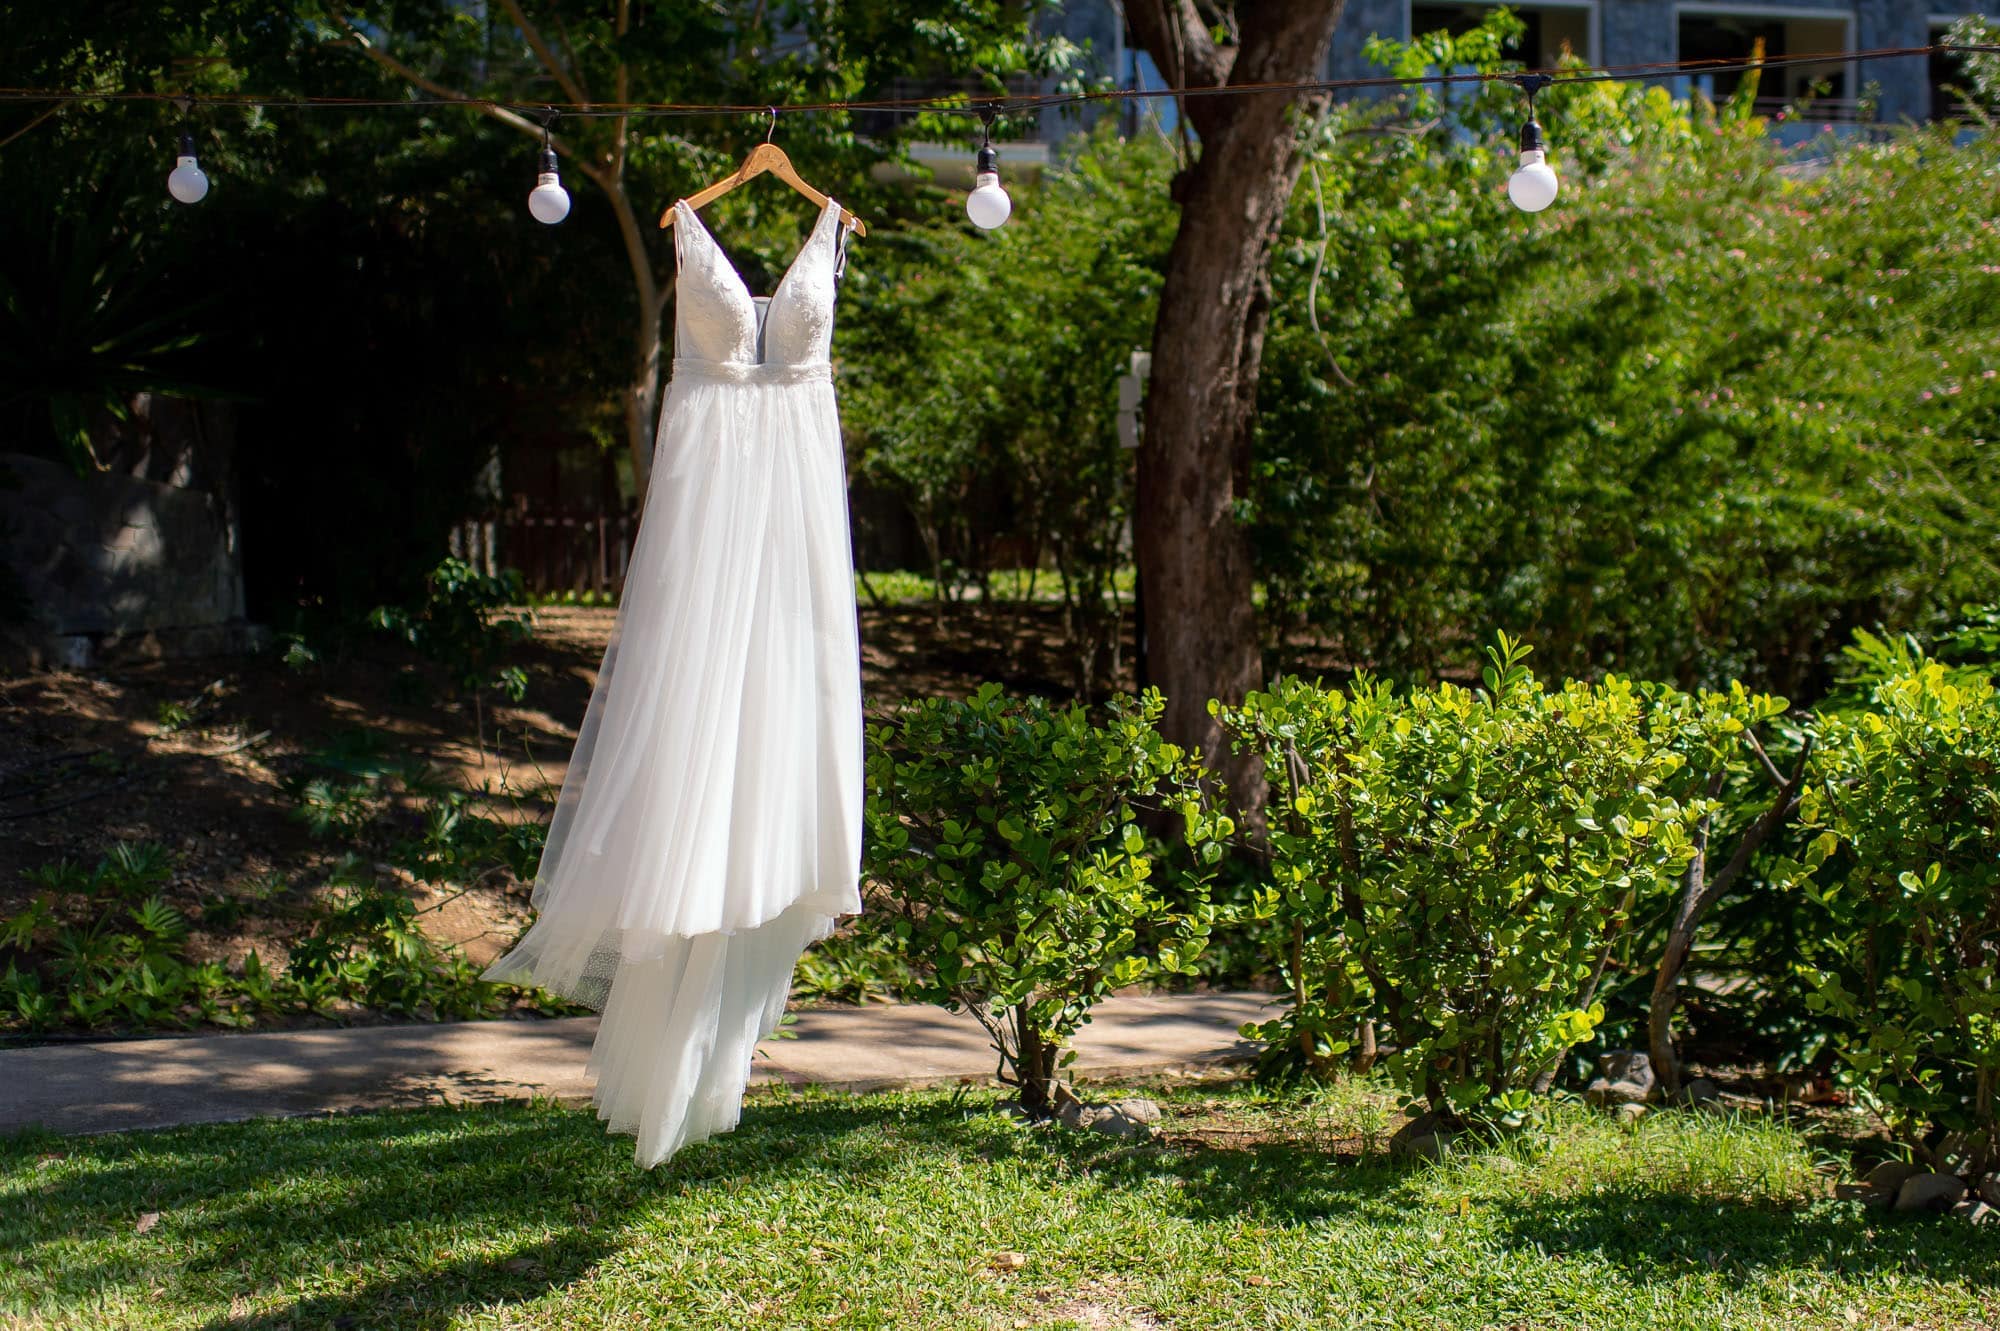 The bride's dress hanging at the wedding reception site at dreams las mareas resort